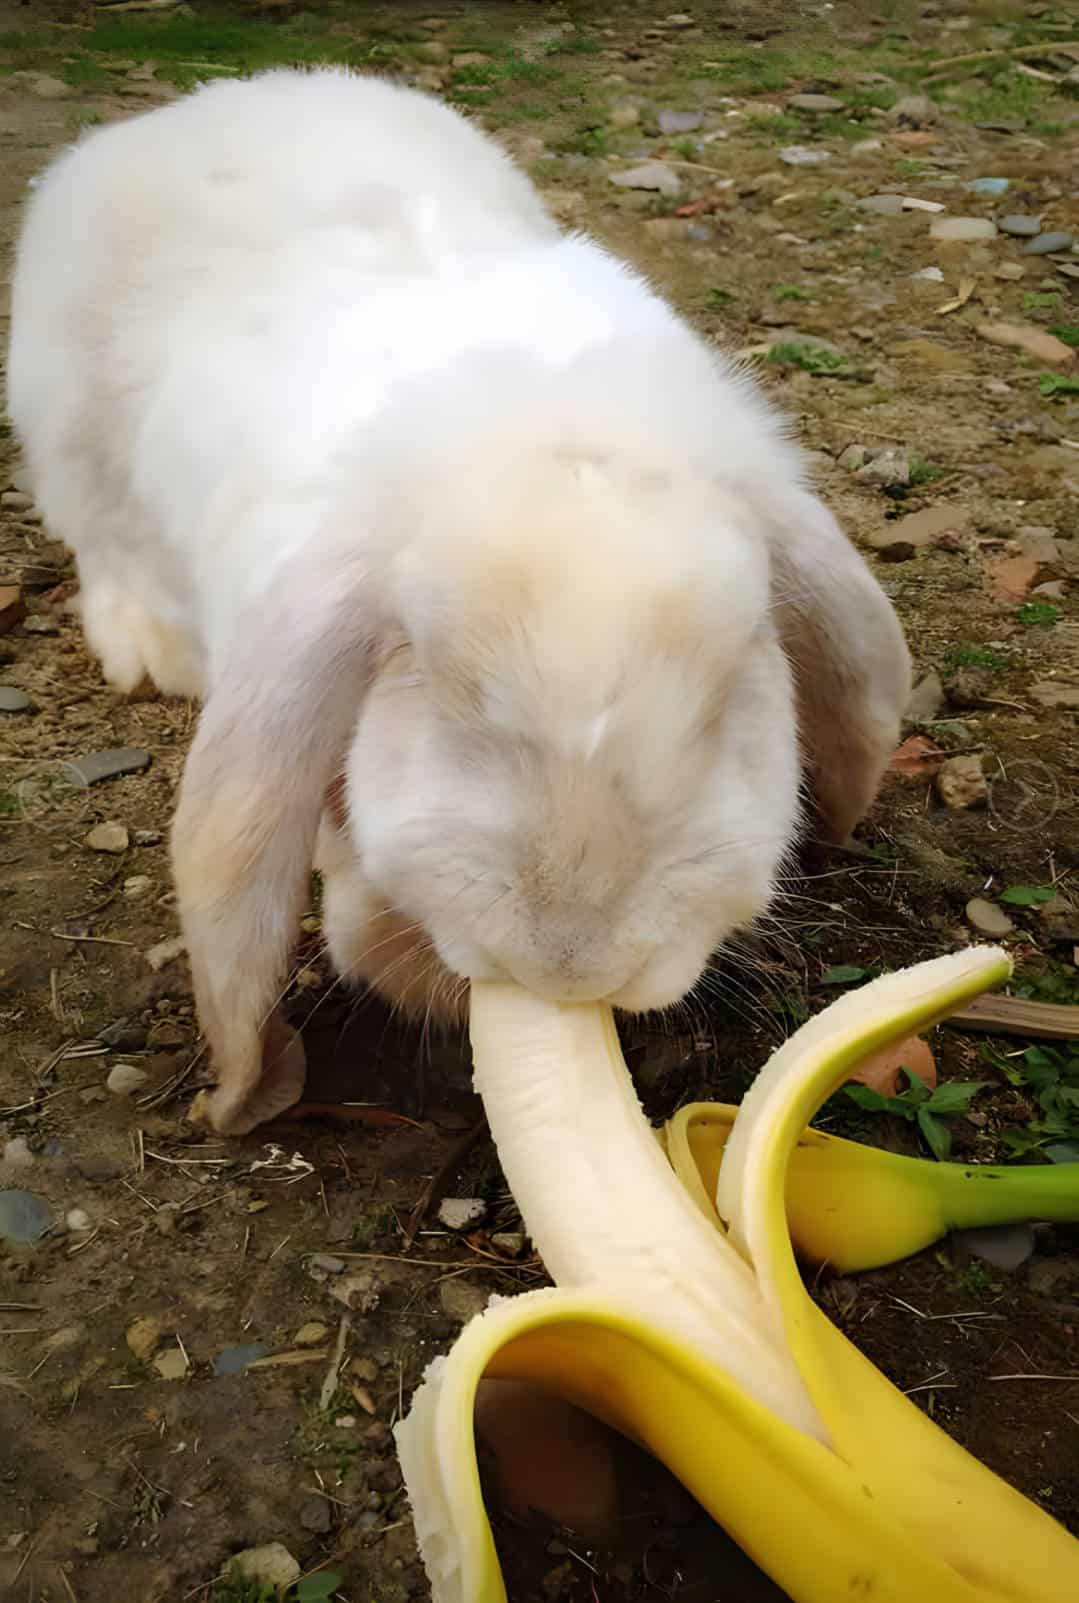 will rabbits eat bananas